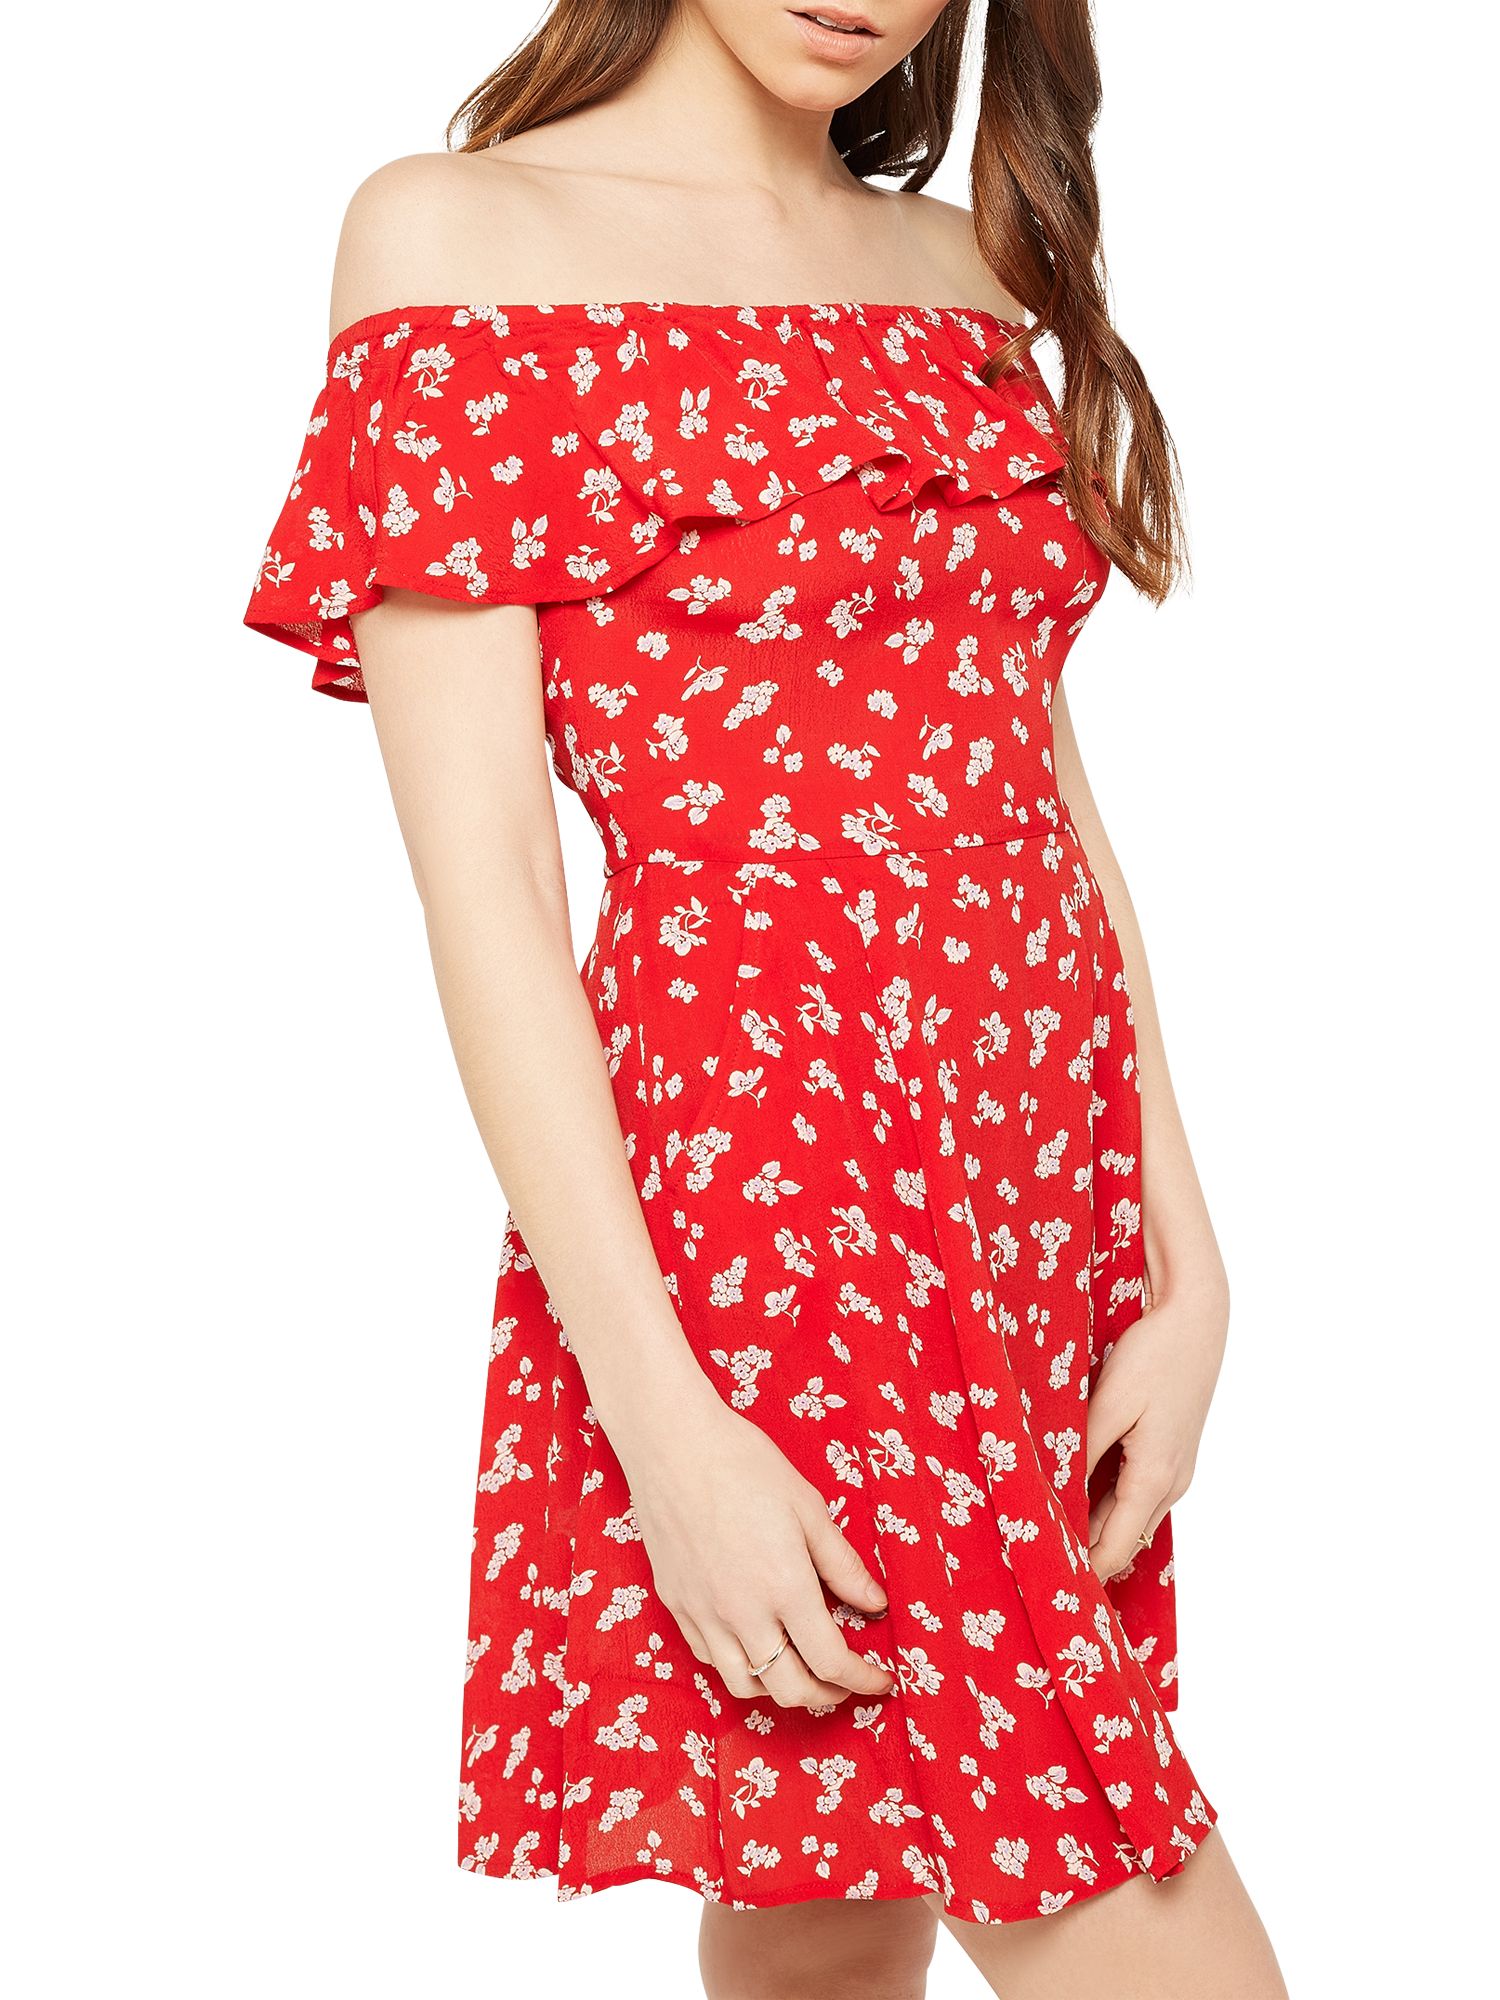 Miss Selfridge Floral Print Bardot Skater Dress, Red